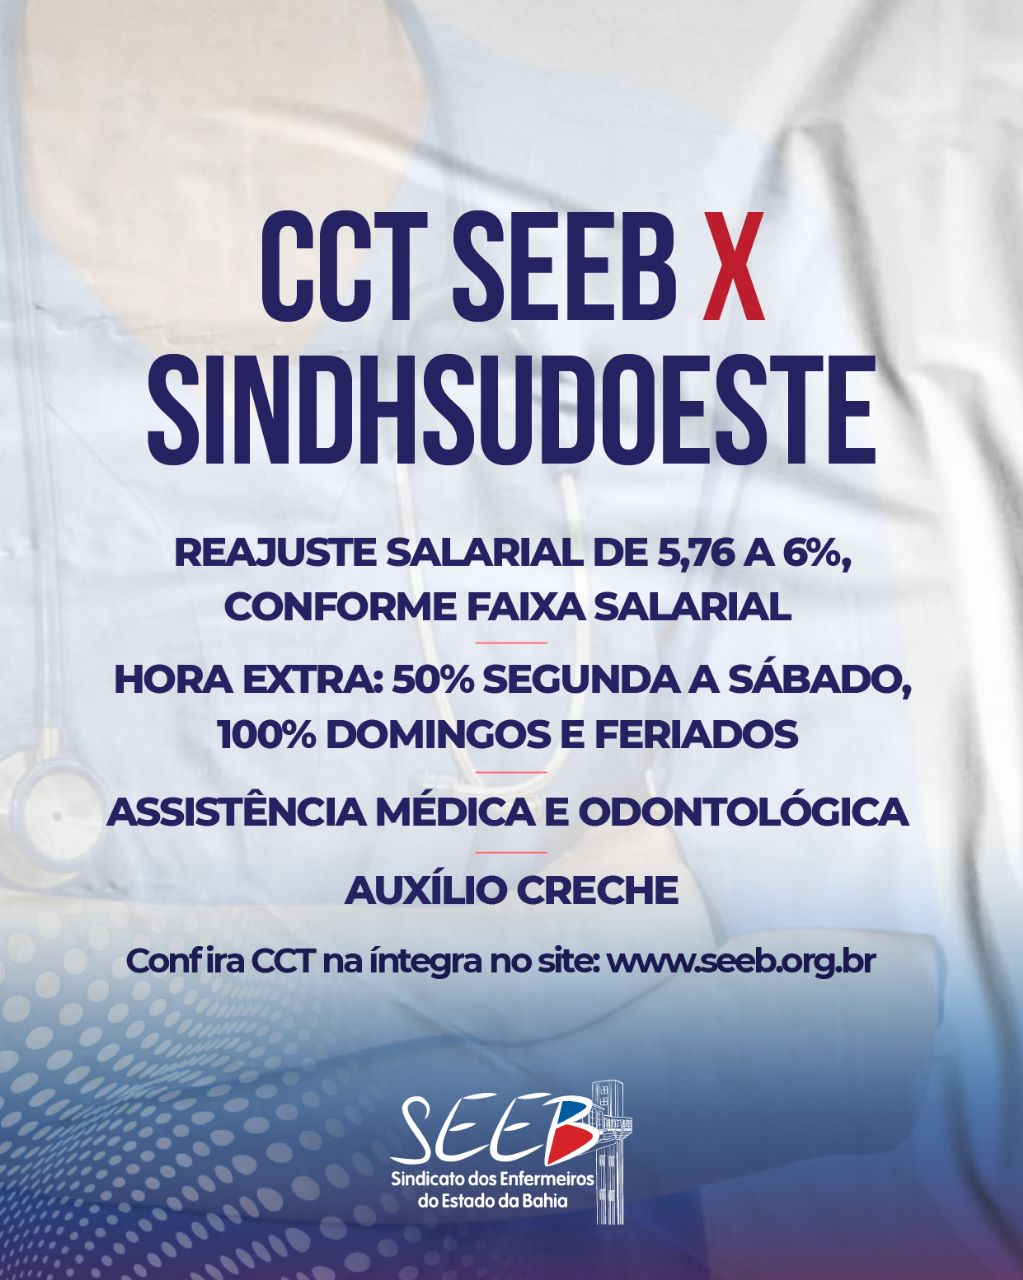 CCT SEEB x SINDHSUDOESTE